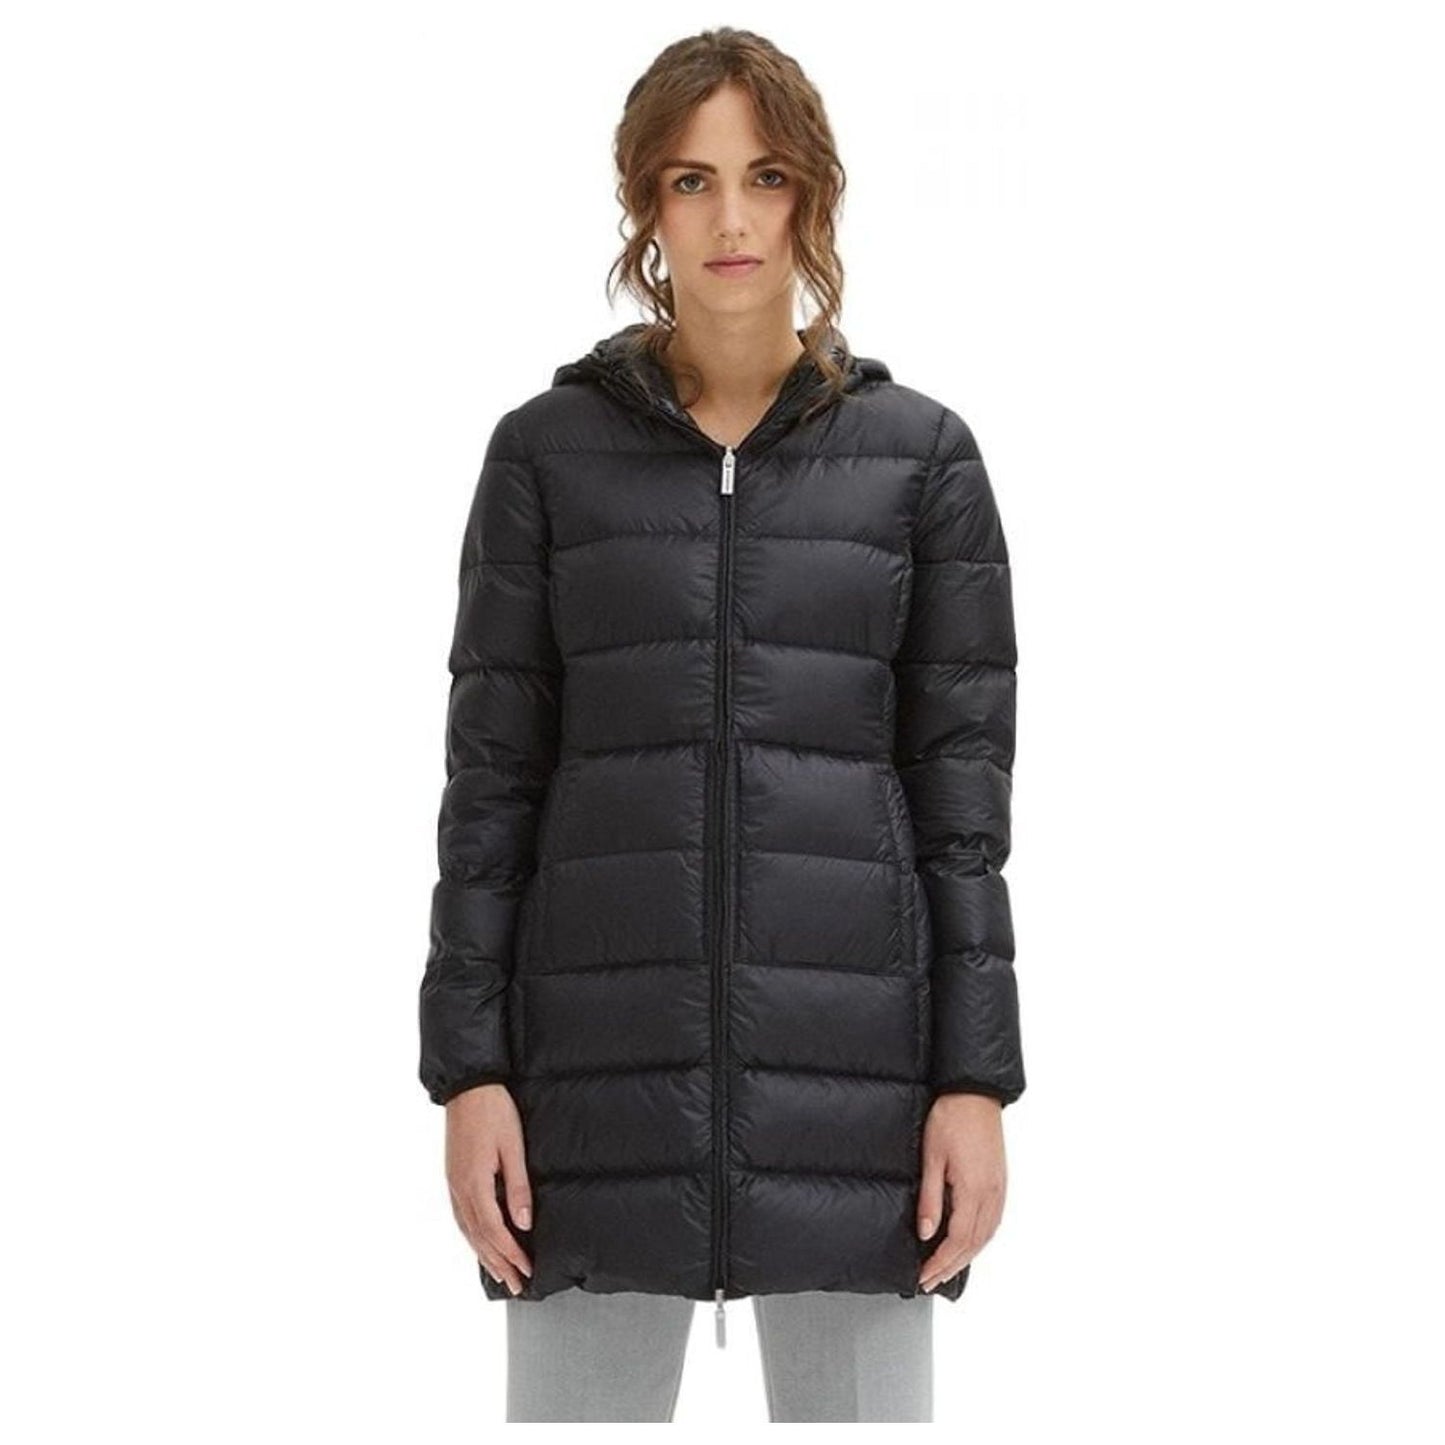 Centogrammi Sleek Nylon Down Jacket with Hood black-nylon-jackets-coat-3 product-8588-1974829690-15290d93-a4e.jpg